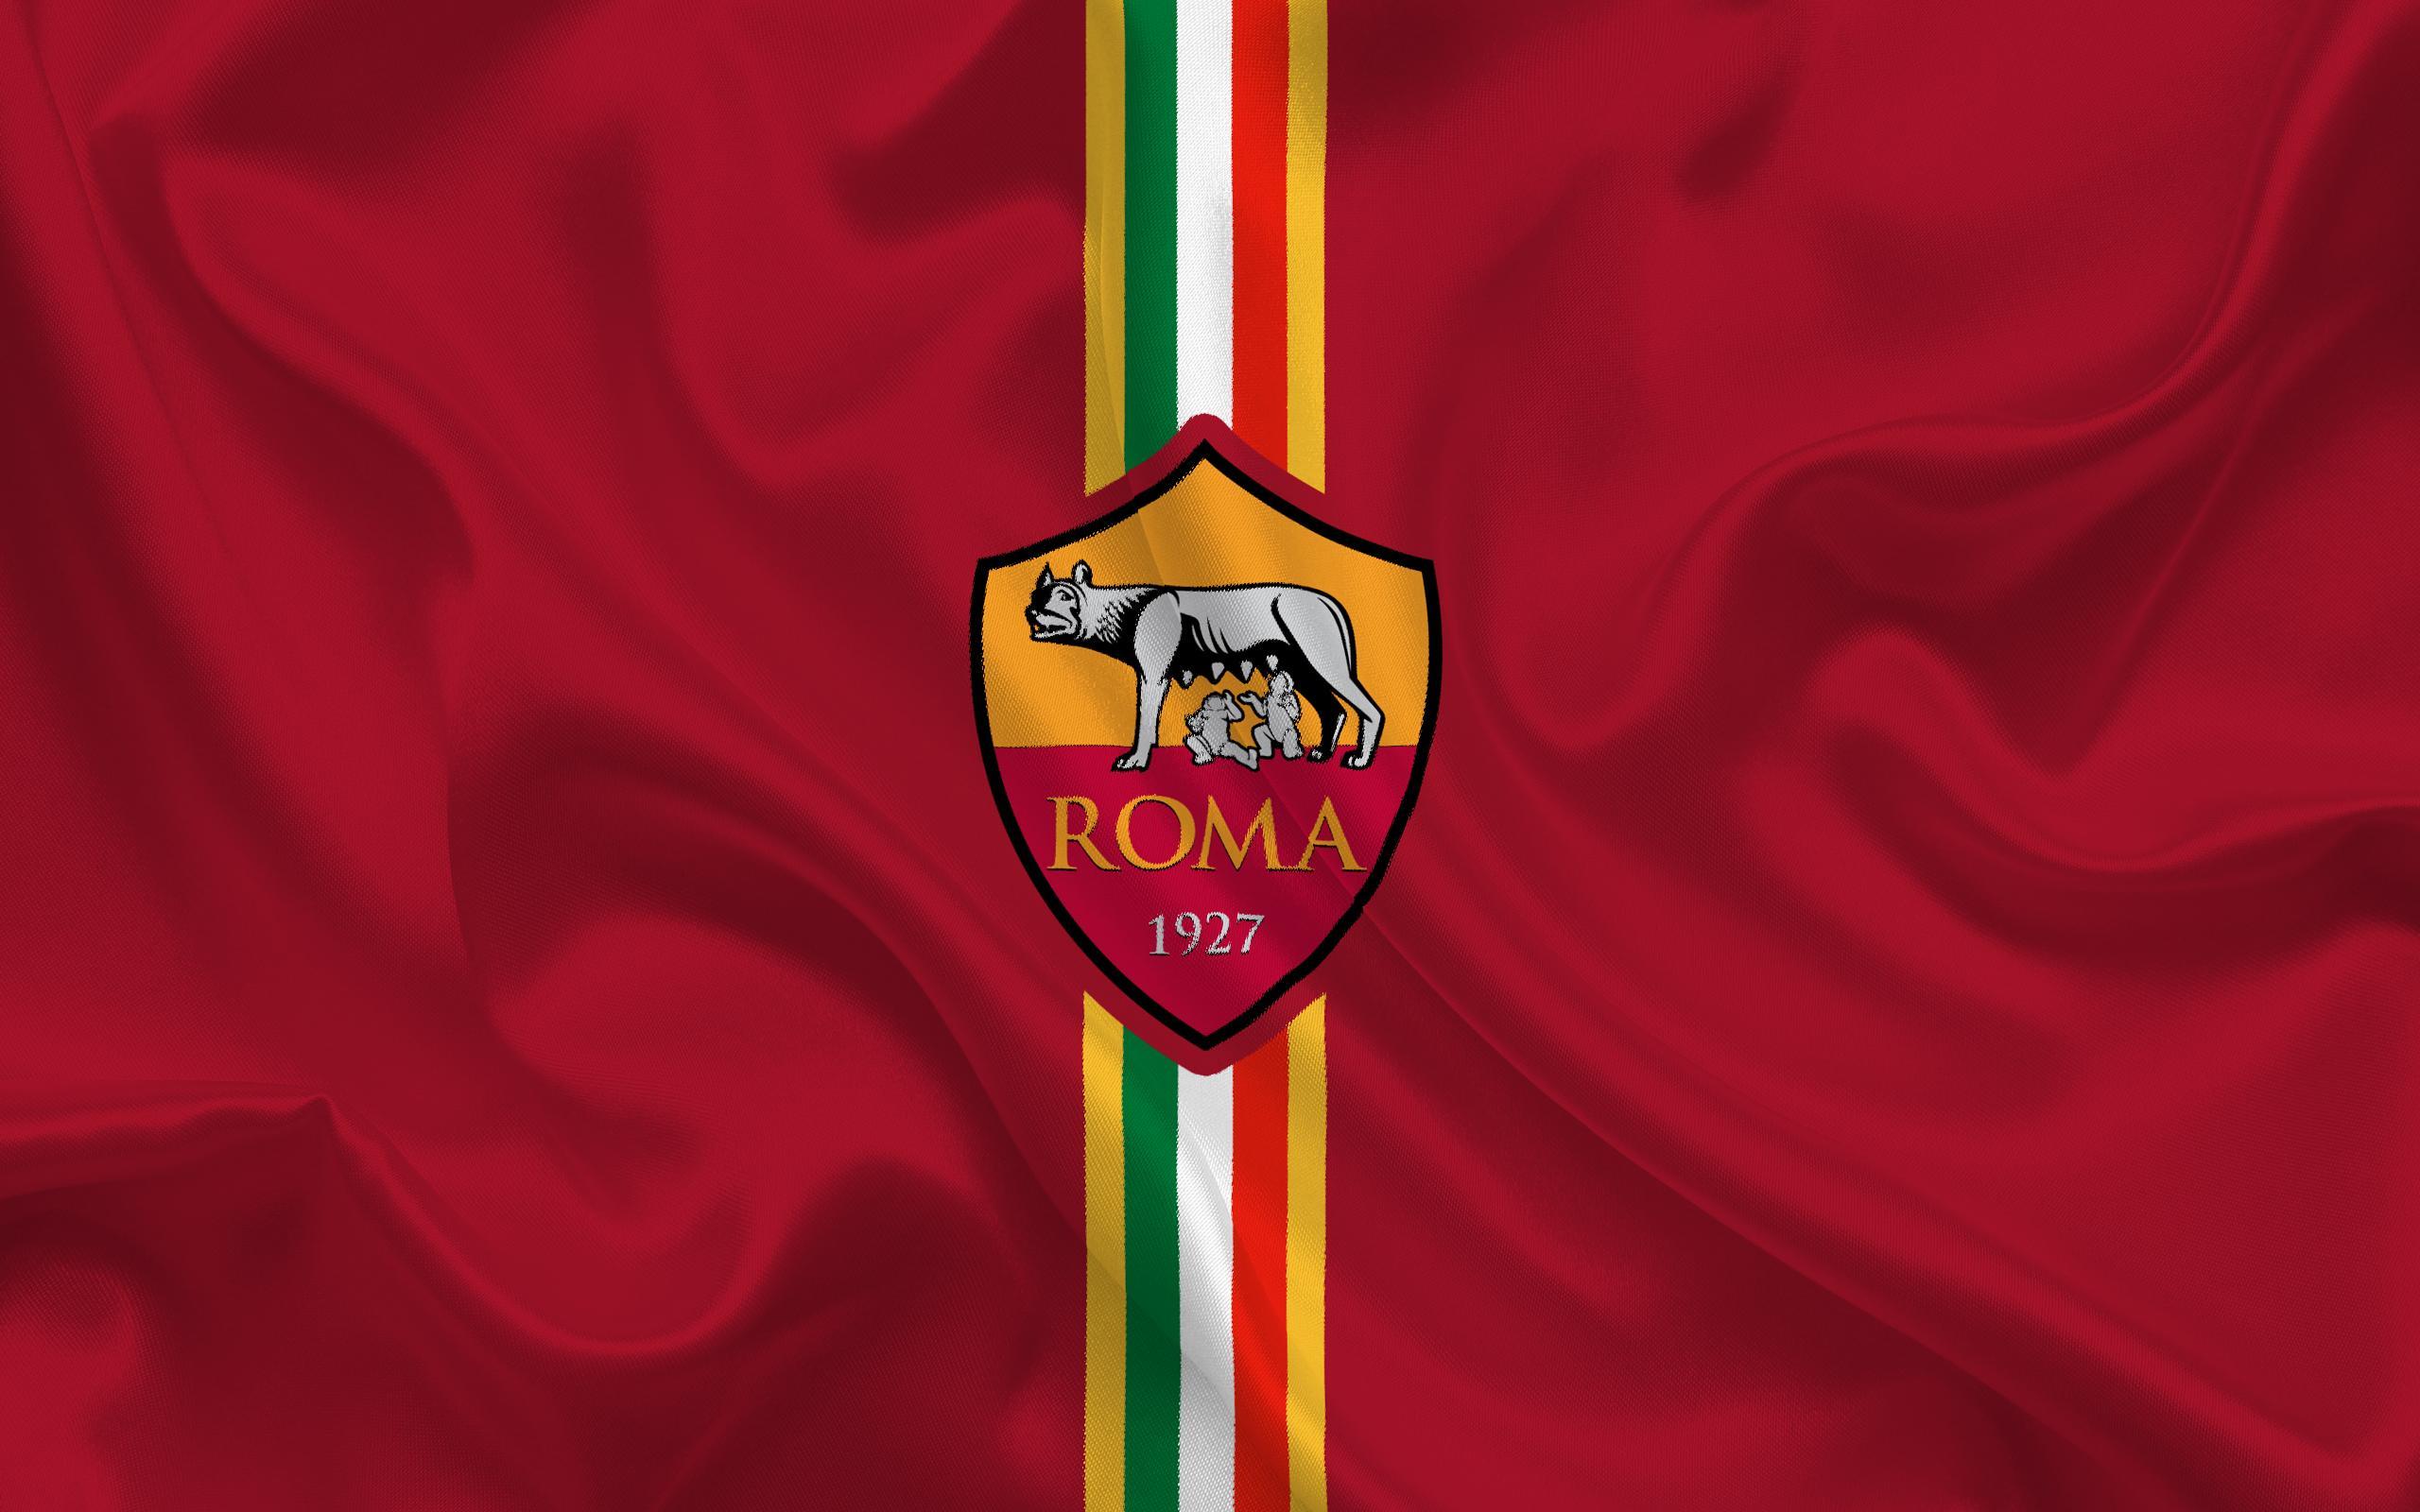 Download wallpaper Roma, football club, emblem of Roma